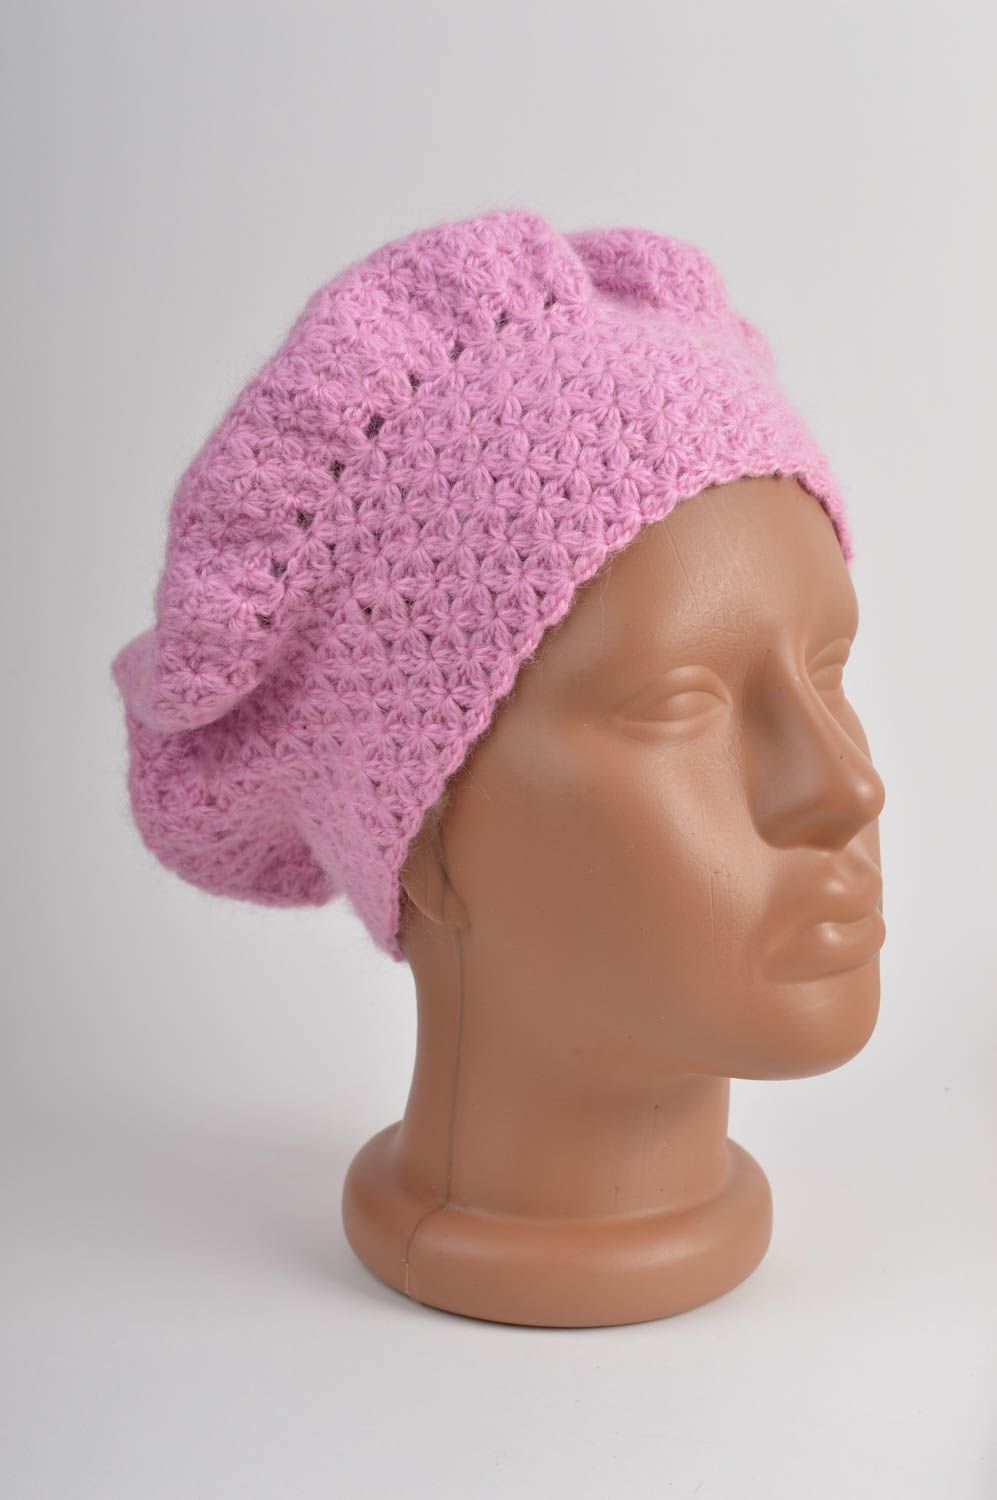 Handmade beret designer beret crocheted beret warm beret gift for girl photo 2